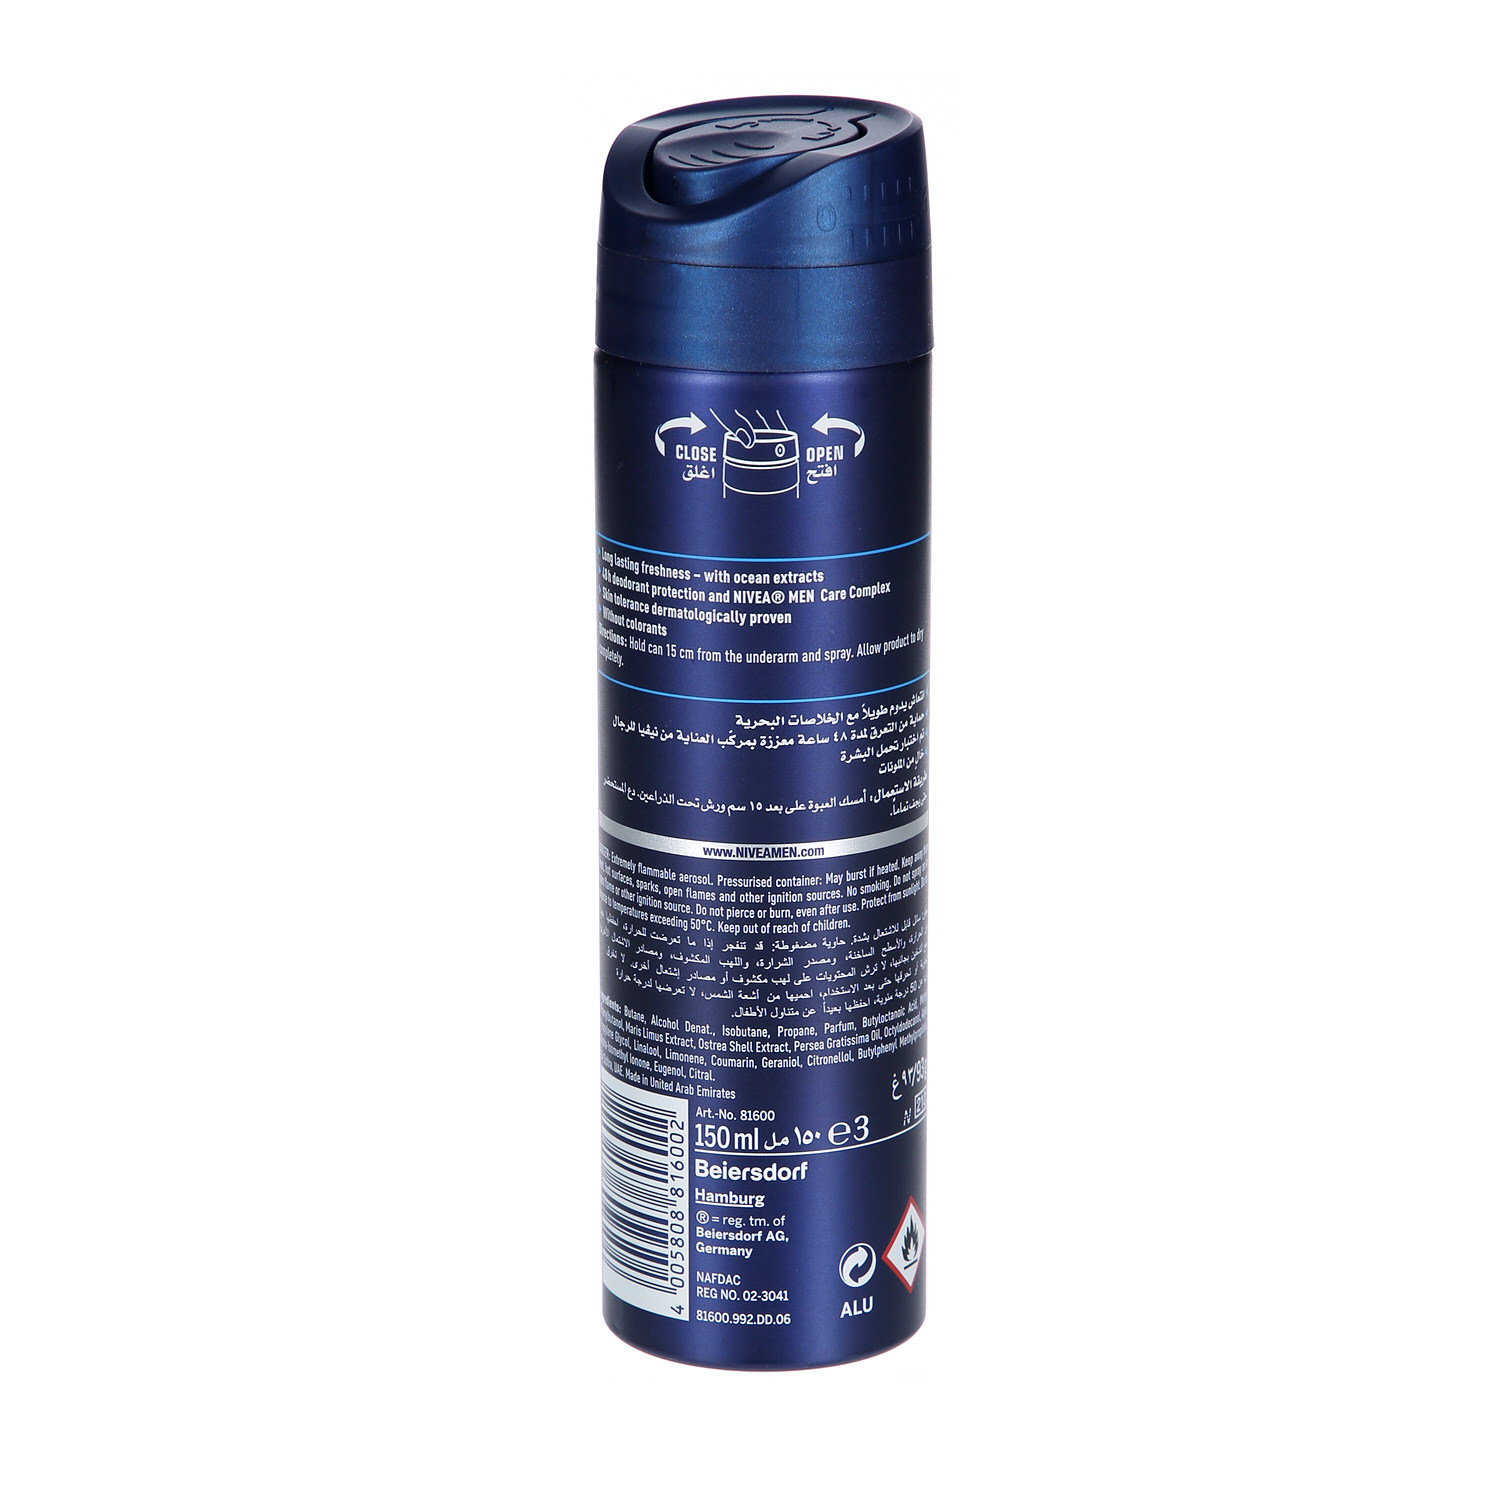 Nivea Men Antiperspirant Spray for Men Fresh Active Fresh Scent 150 ml